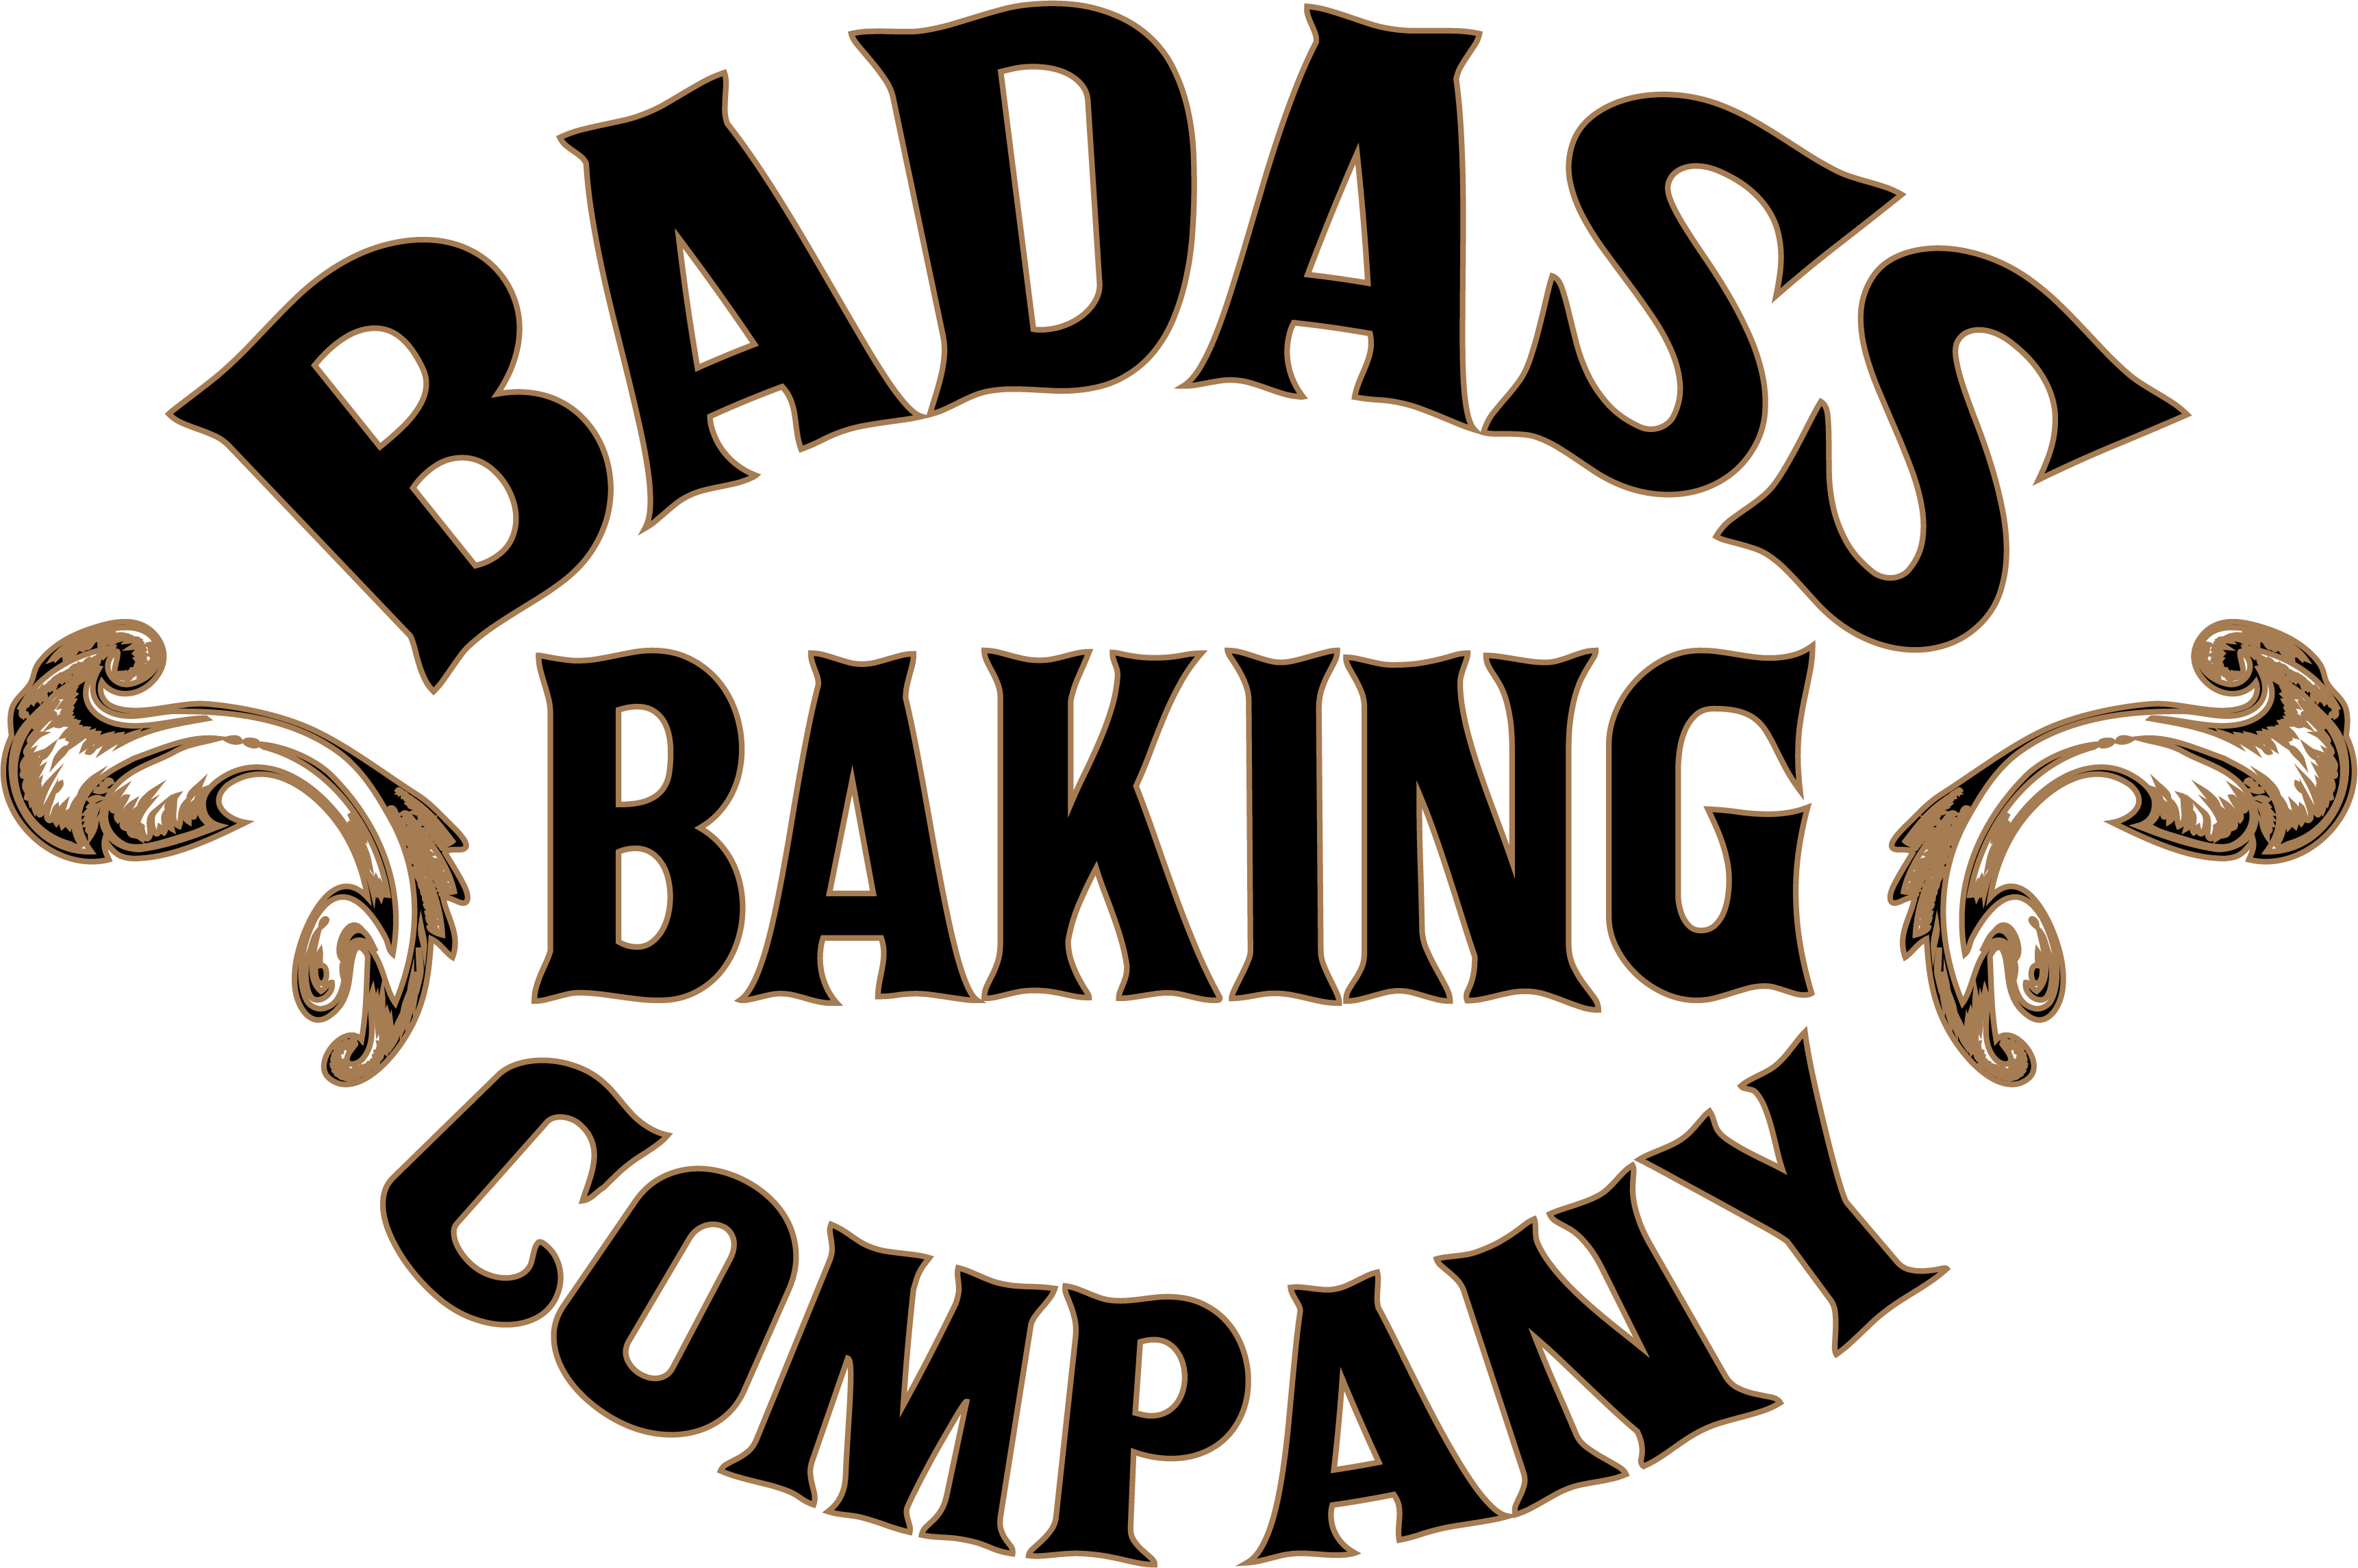 Badass Baking Company